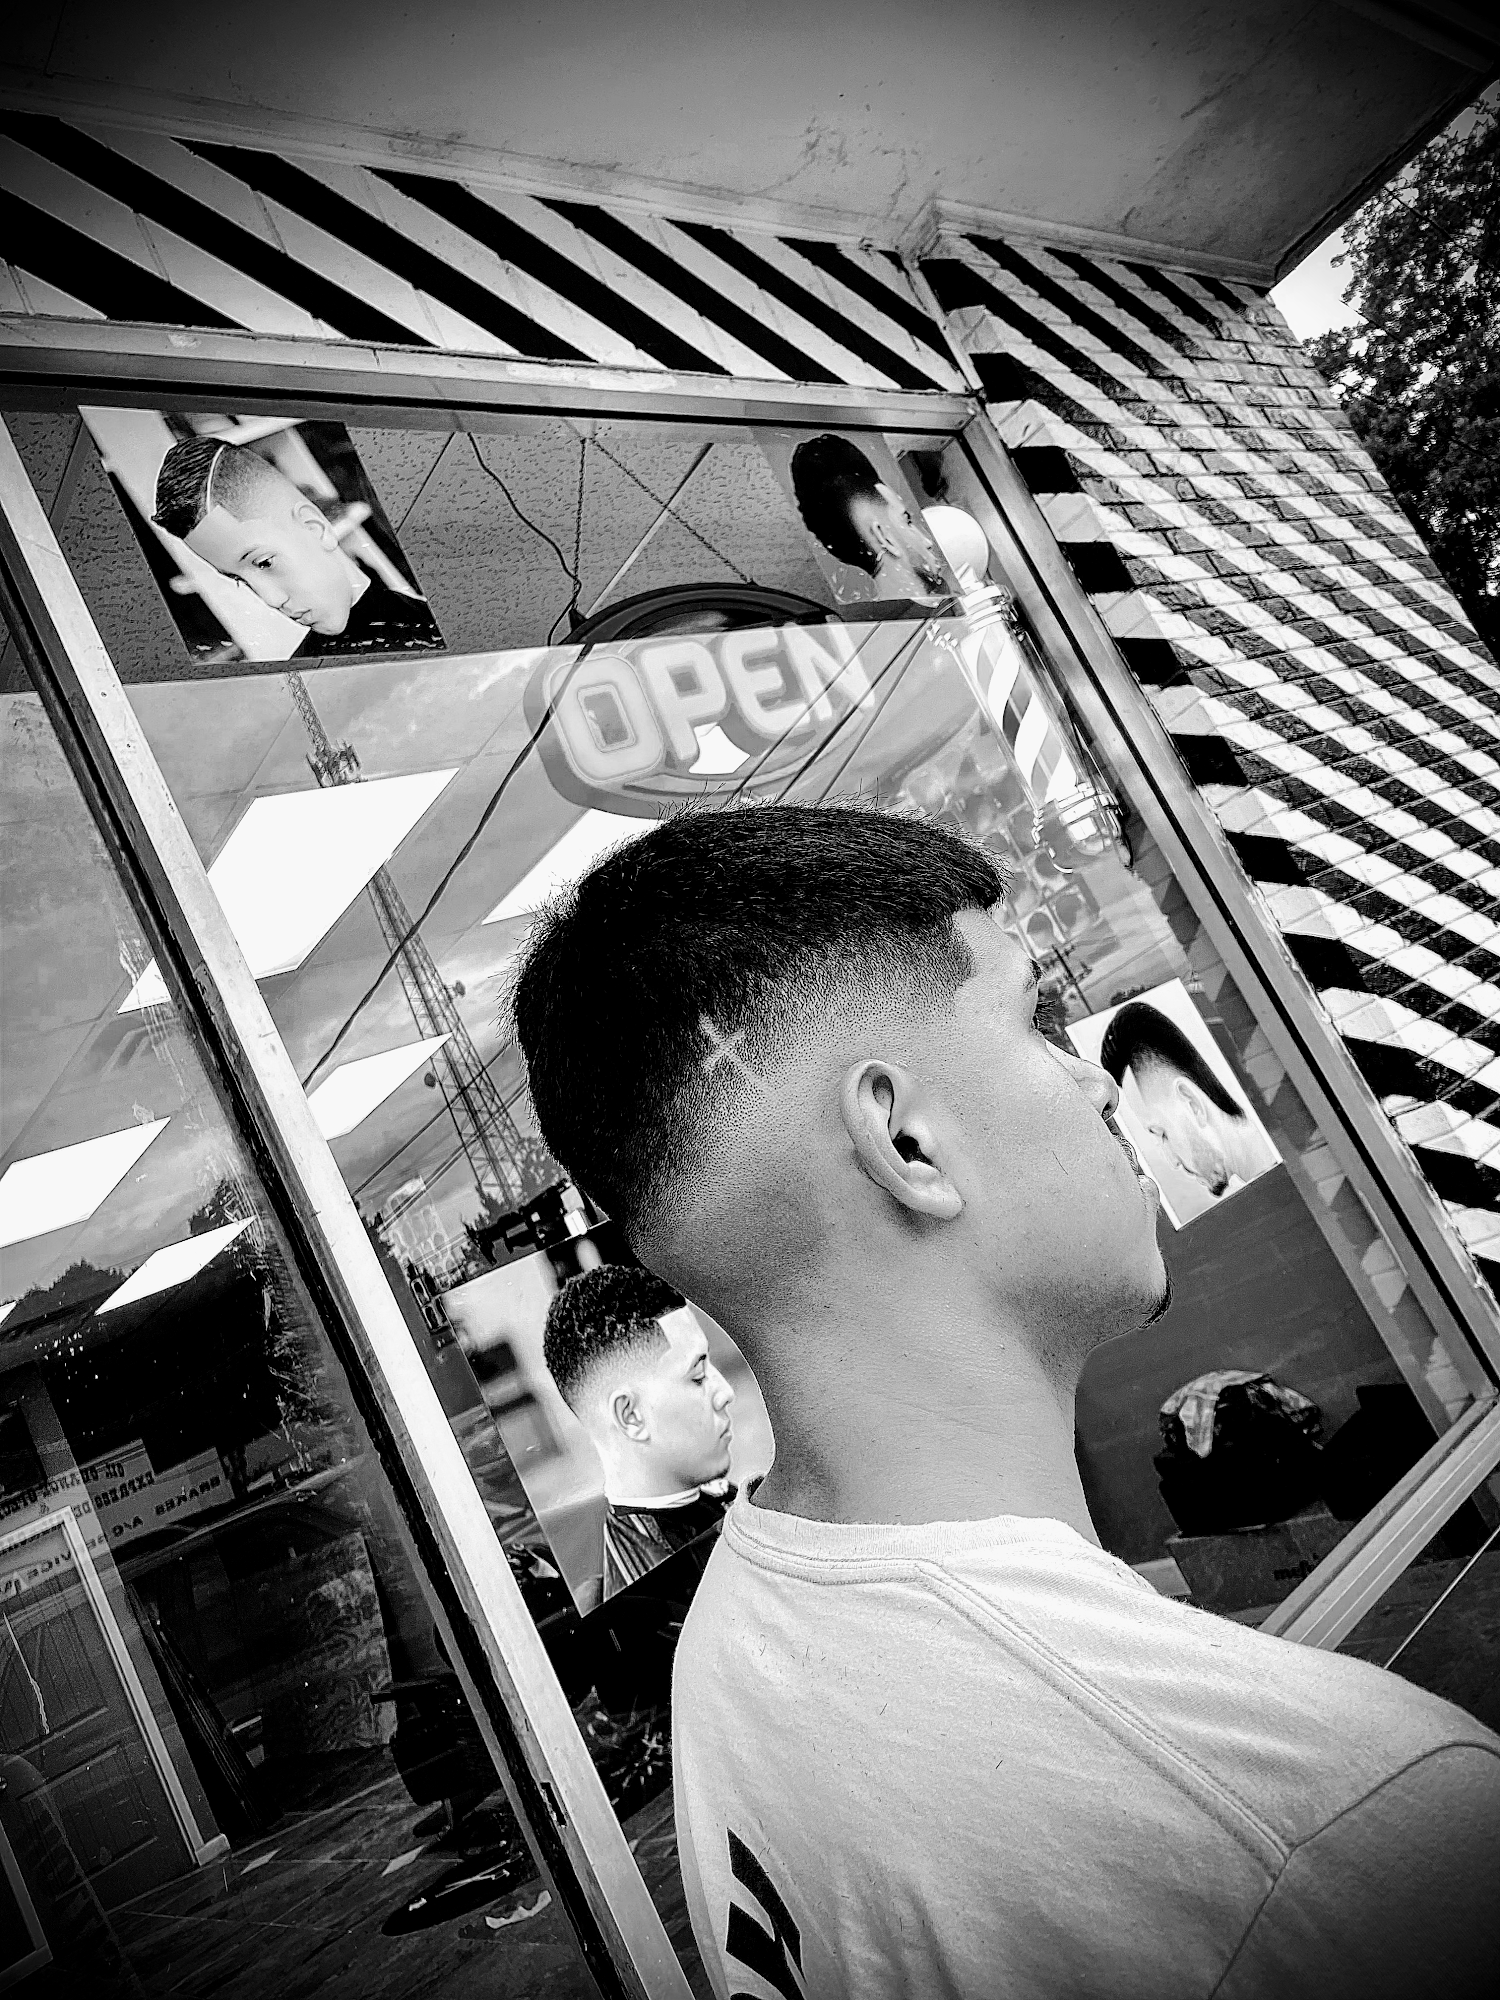 Brothers barbershop 201N N Main St suite a, Boaz Alabama 35957